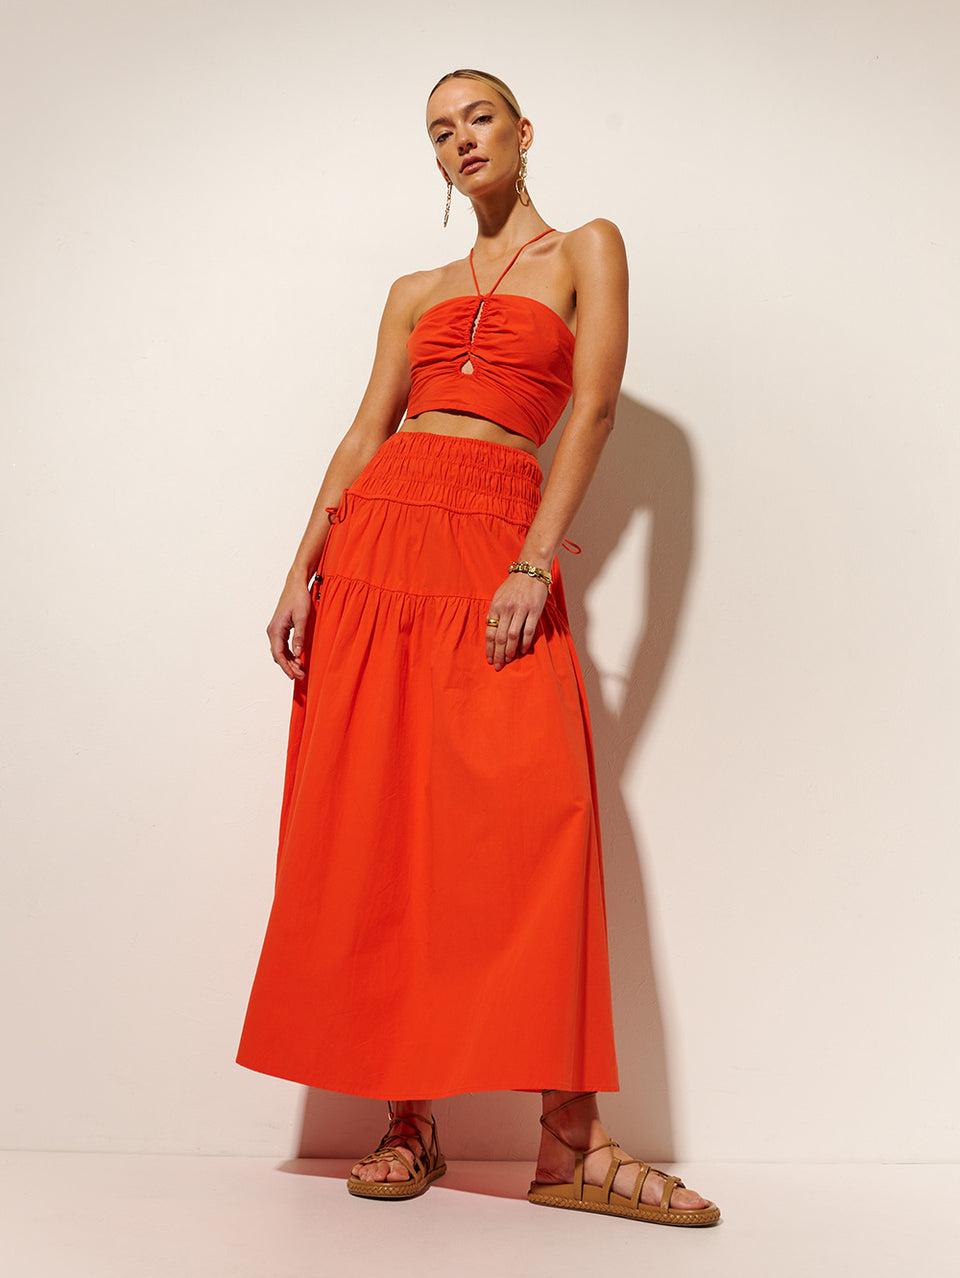 Nora Maxi Skirt | Model wears red maxi skirt